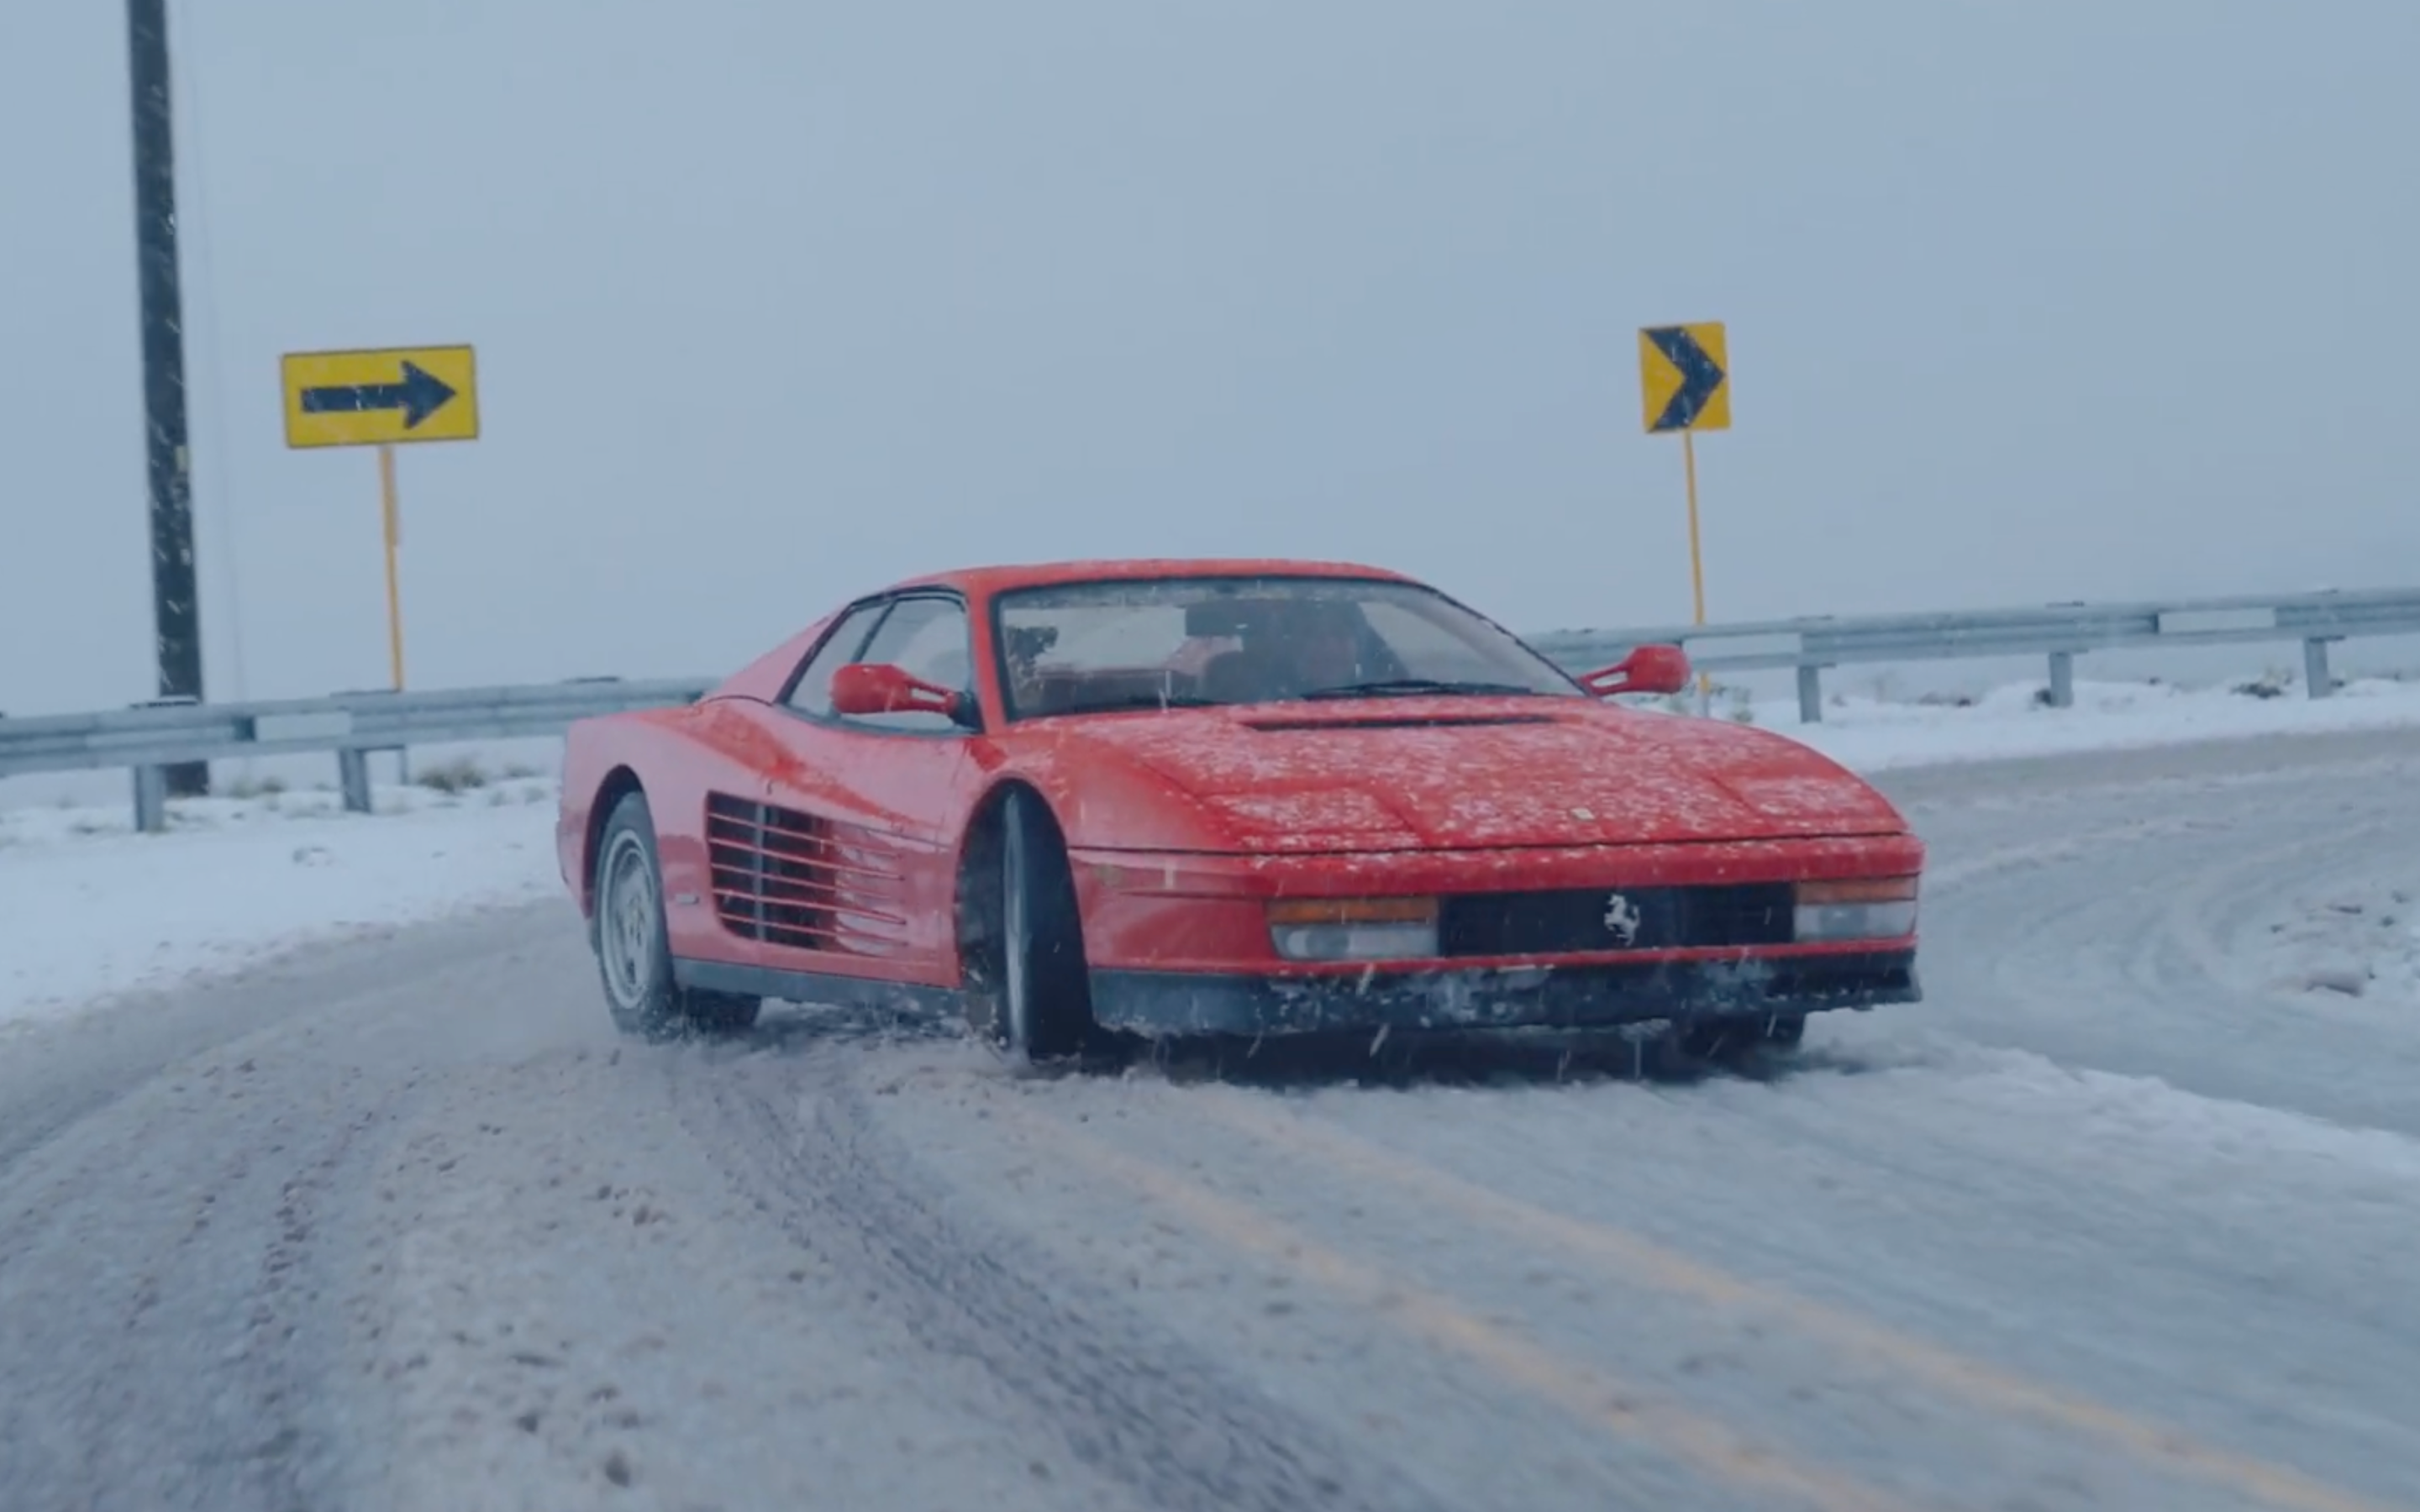 Coche deportivo rojo 1984 Ferrari Testarossa a la deriva en la nieve